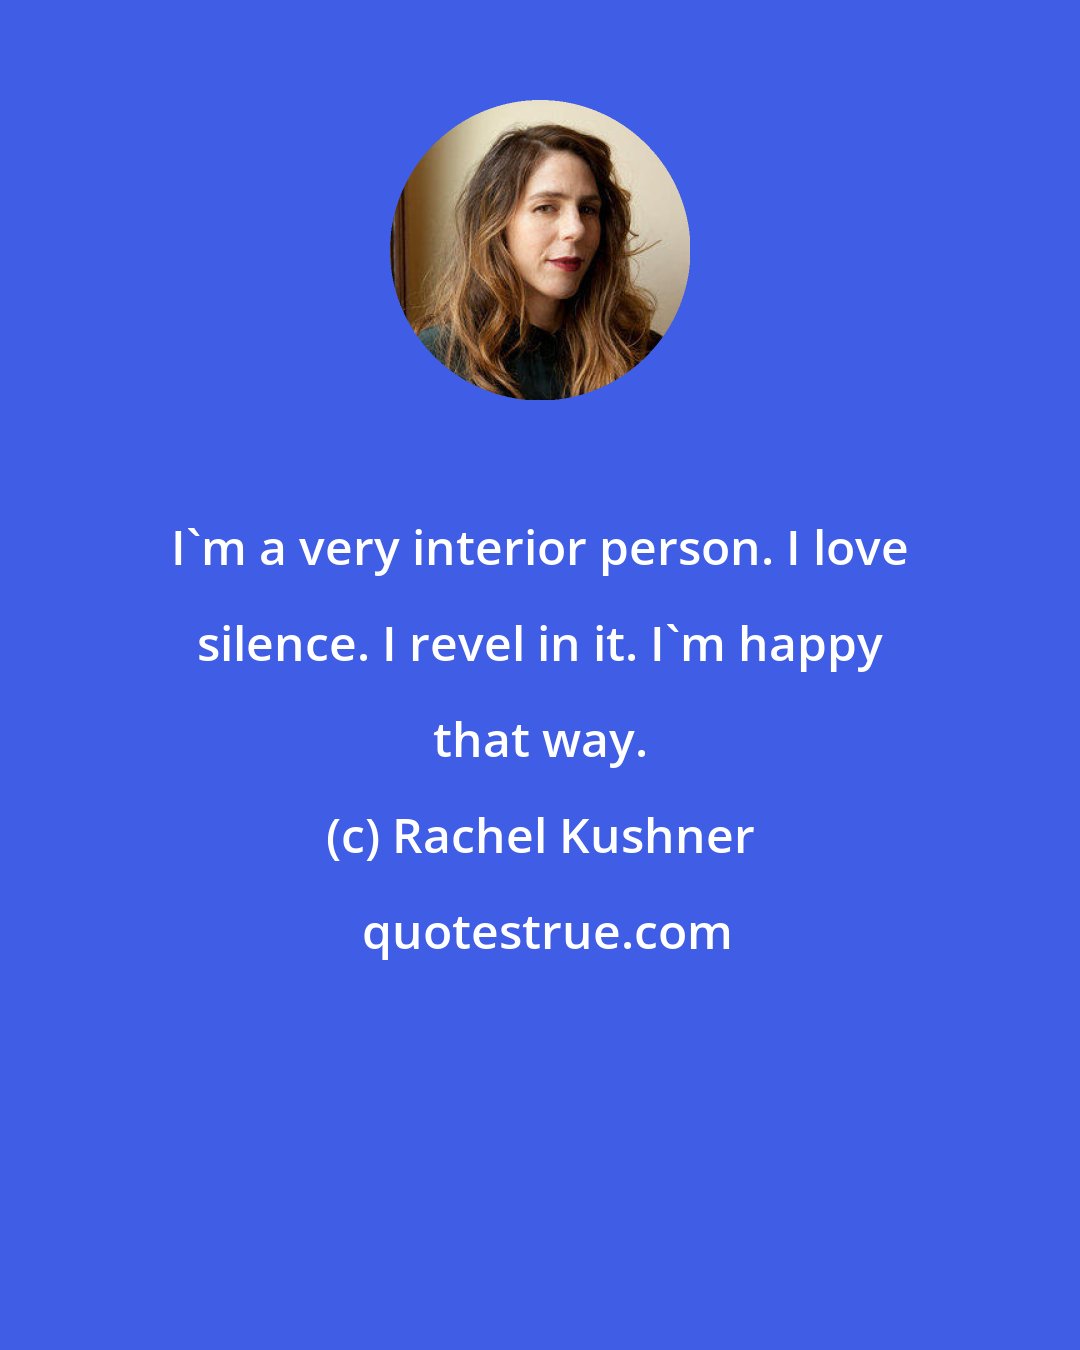 Rachel Kushner: I'm a very interior person. I love silence. I revel in it. I'm happy that way.